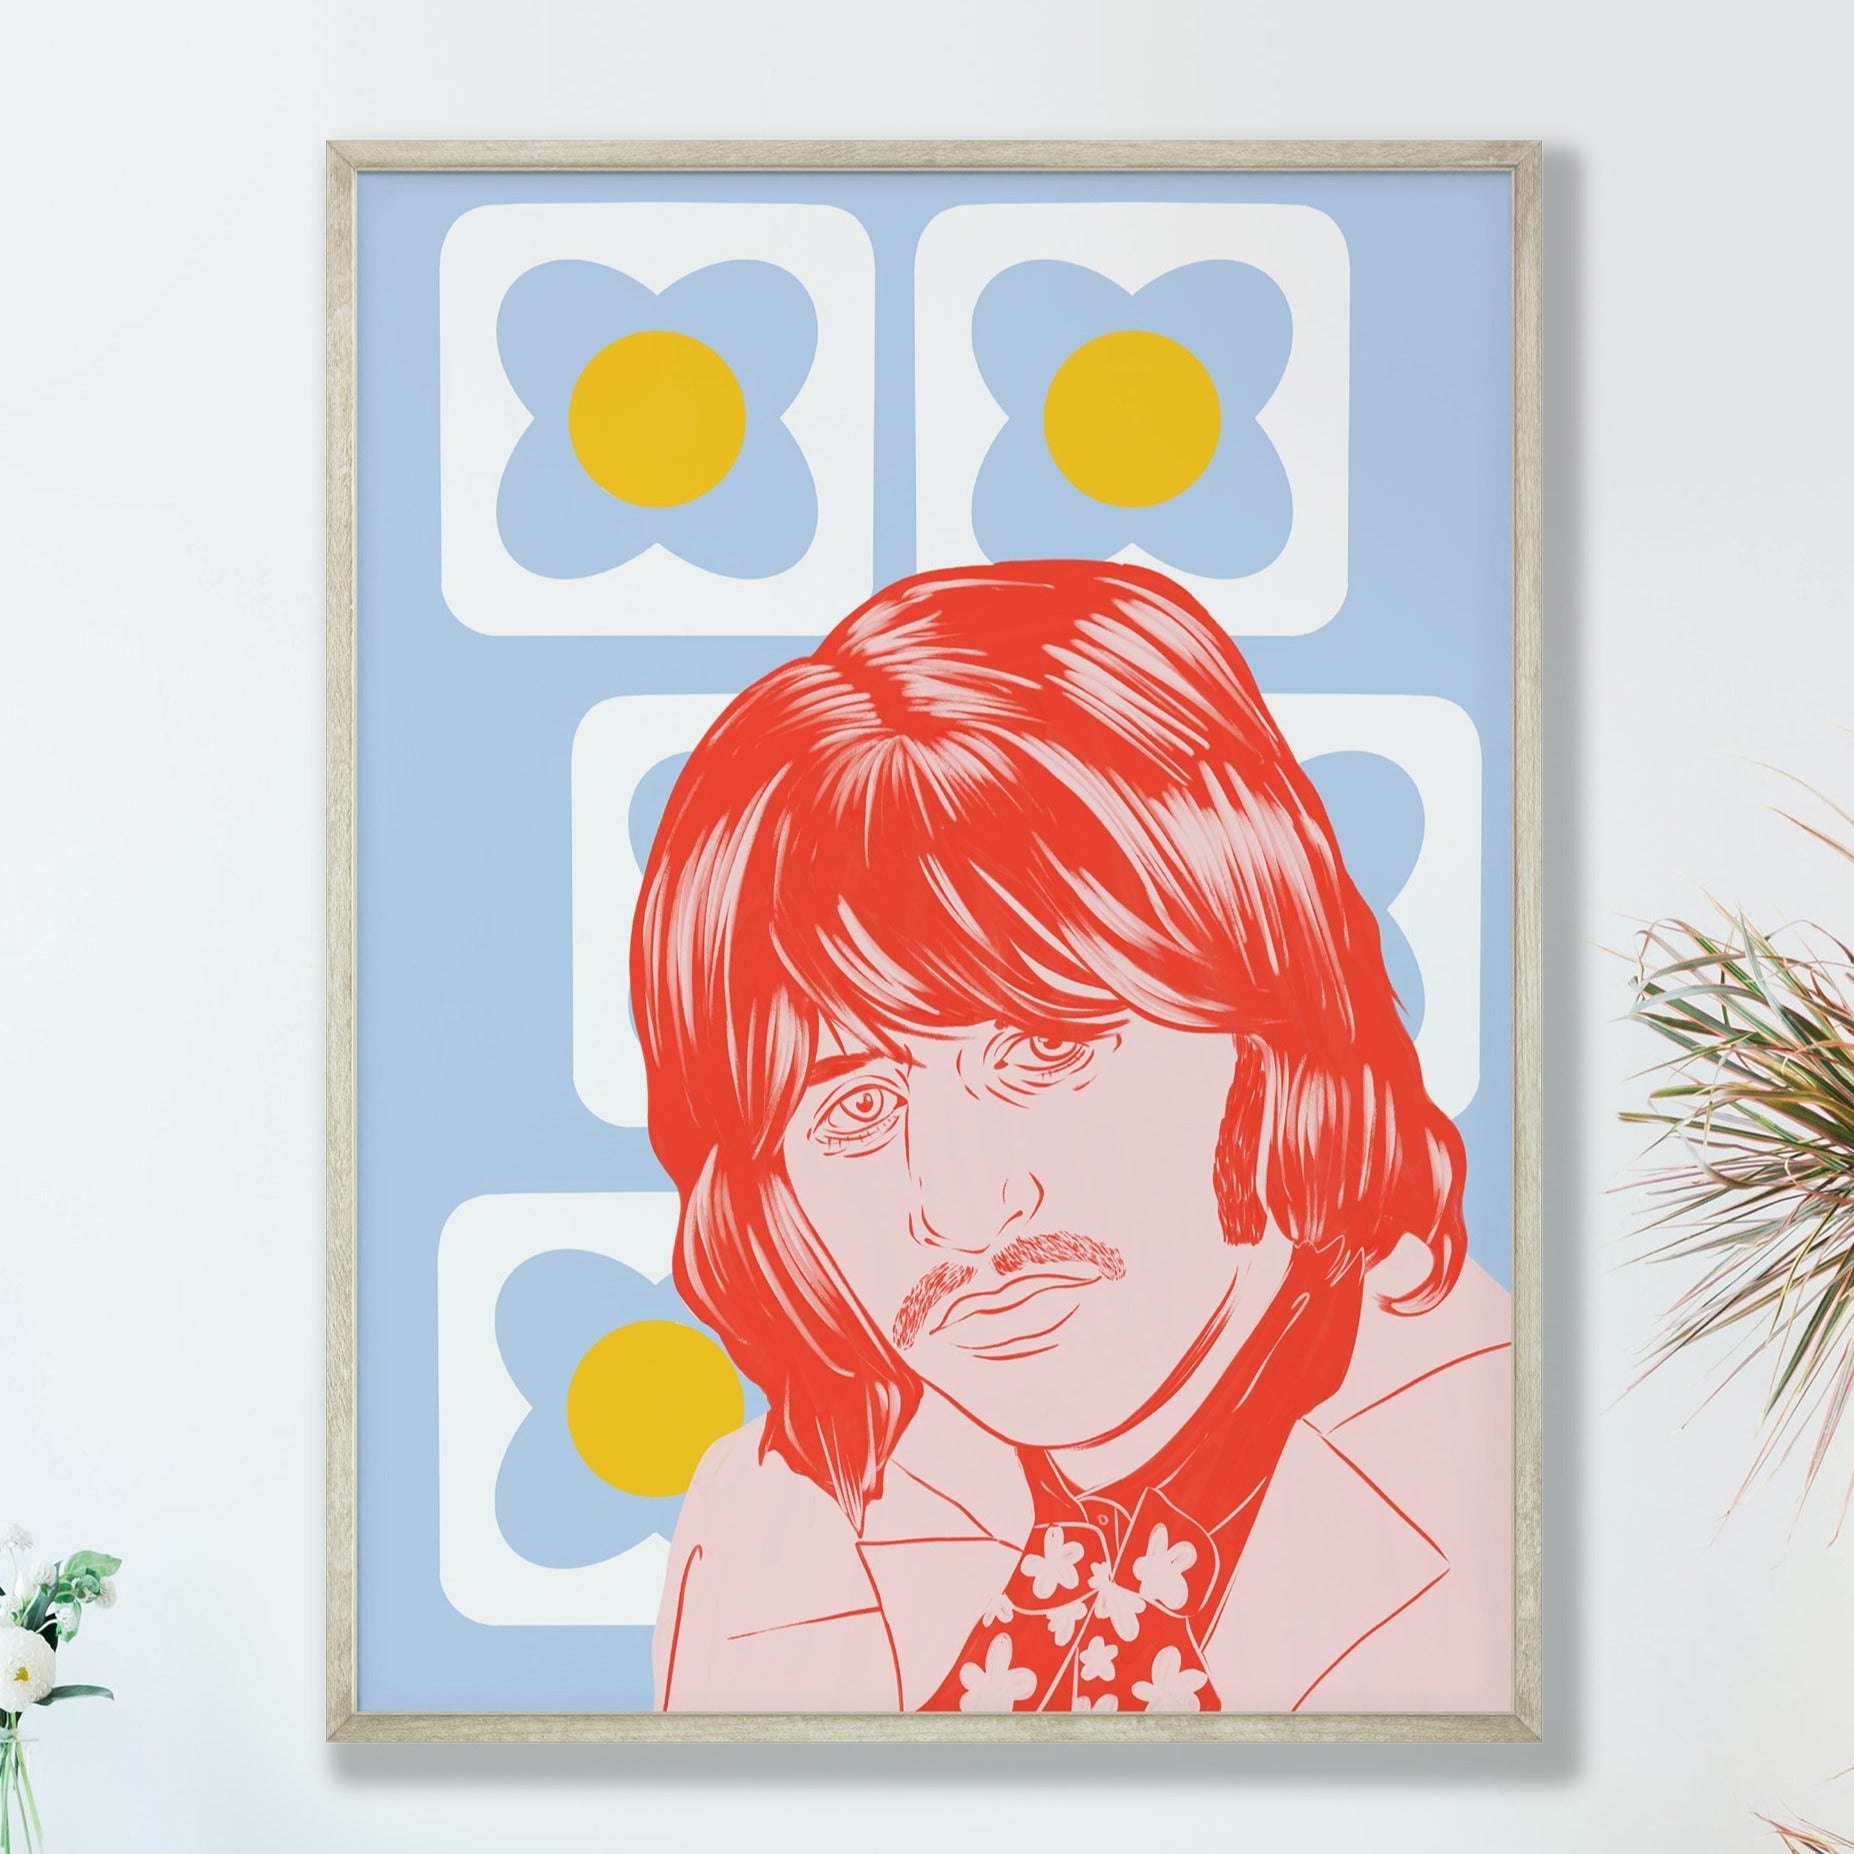 image of ringo starr art print framed on a white wall .